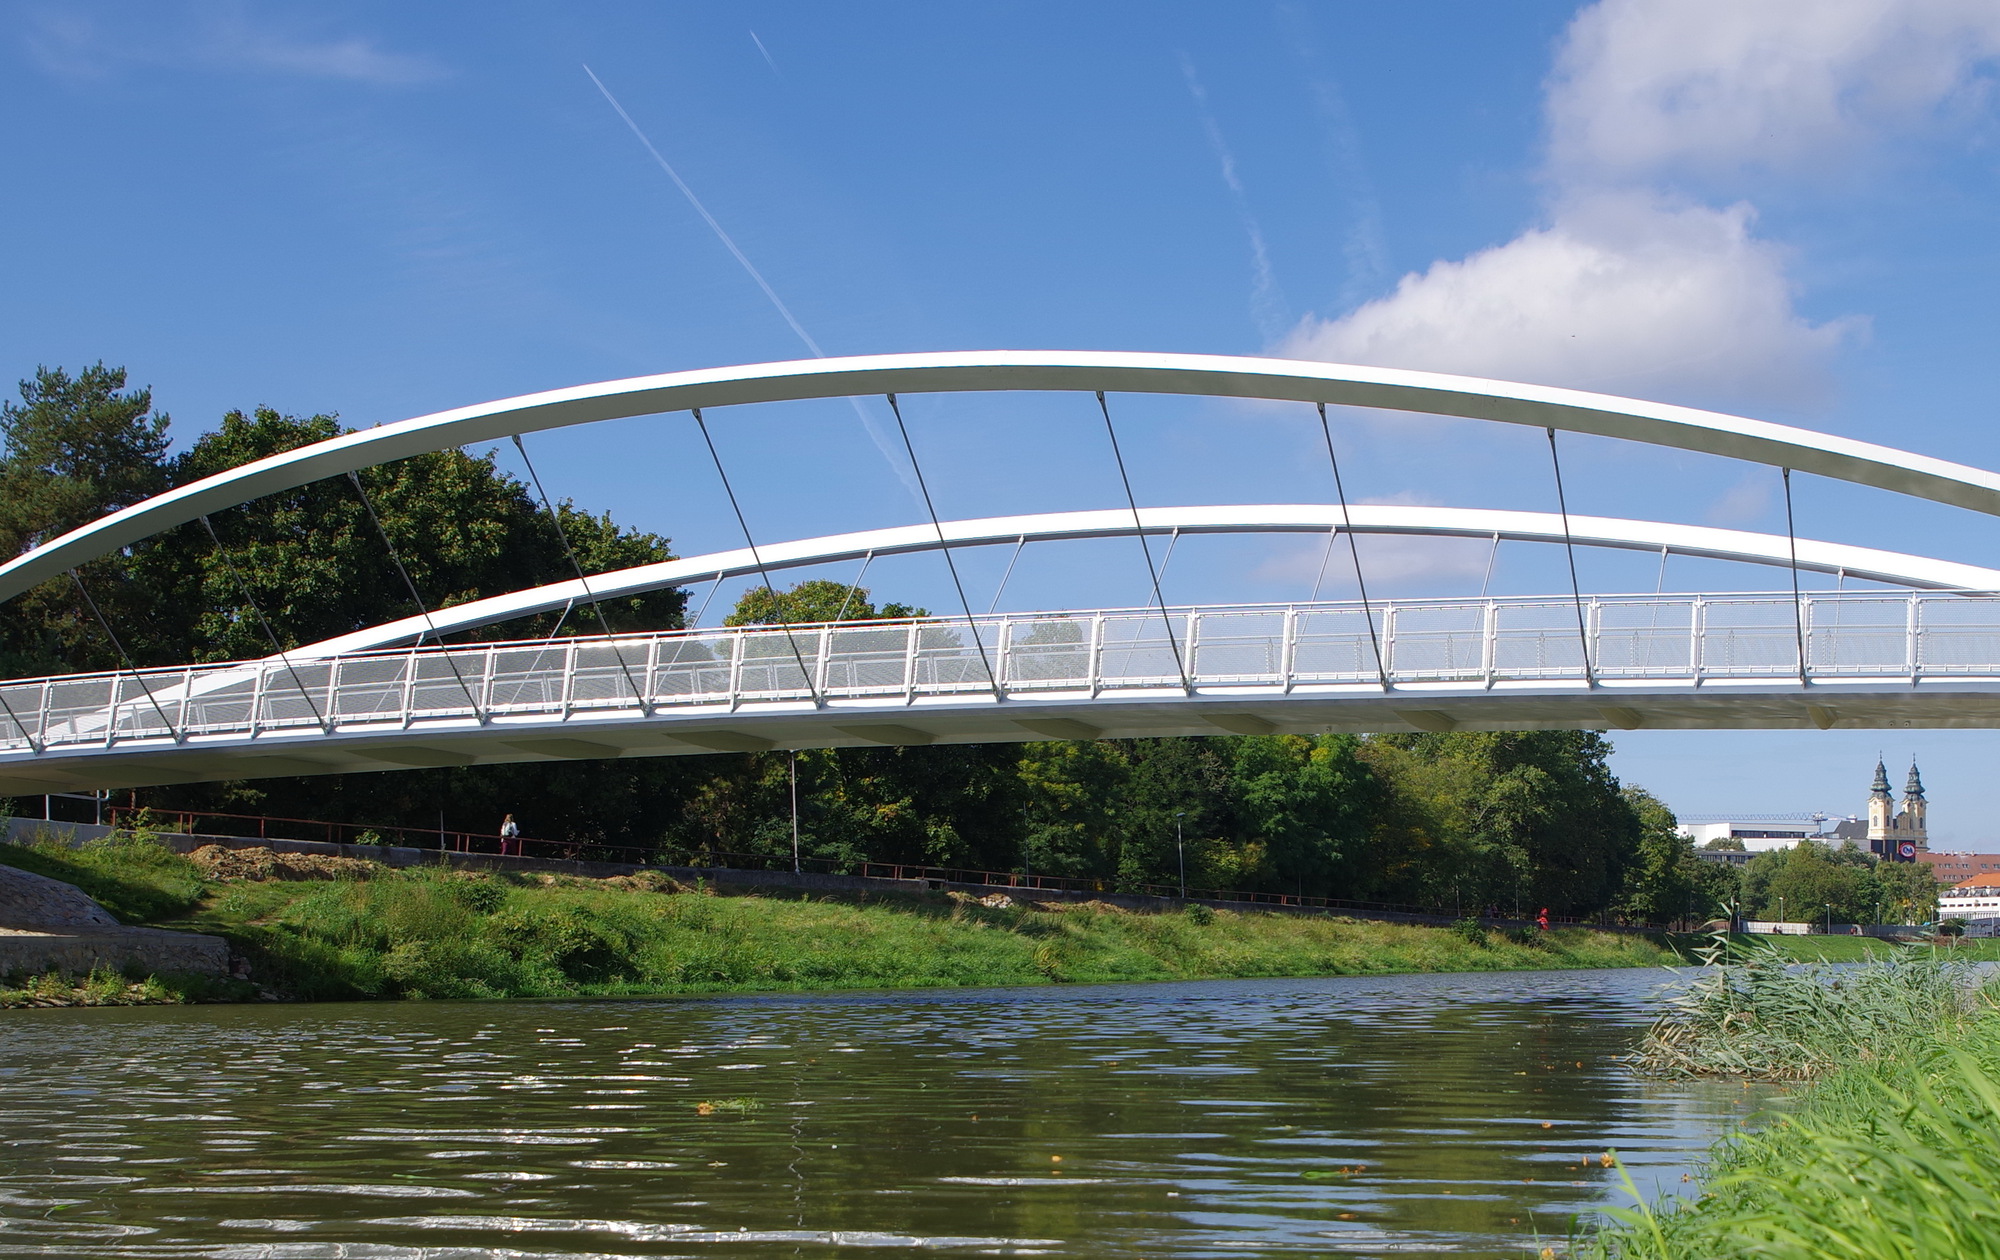  Kalvarsky Most - 横跨尼特拉河的自行车桥丨Kalvarsky Most - Cyclist Bridge across the River Nitra-4